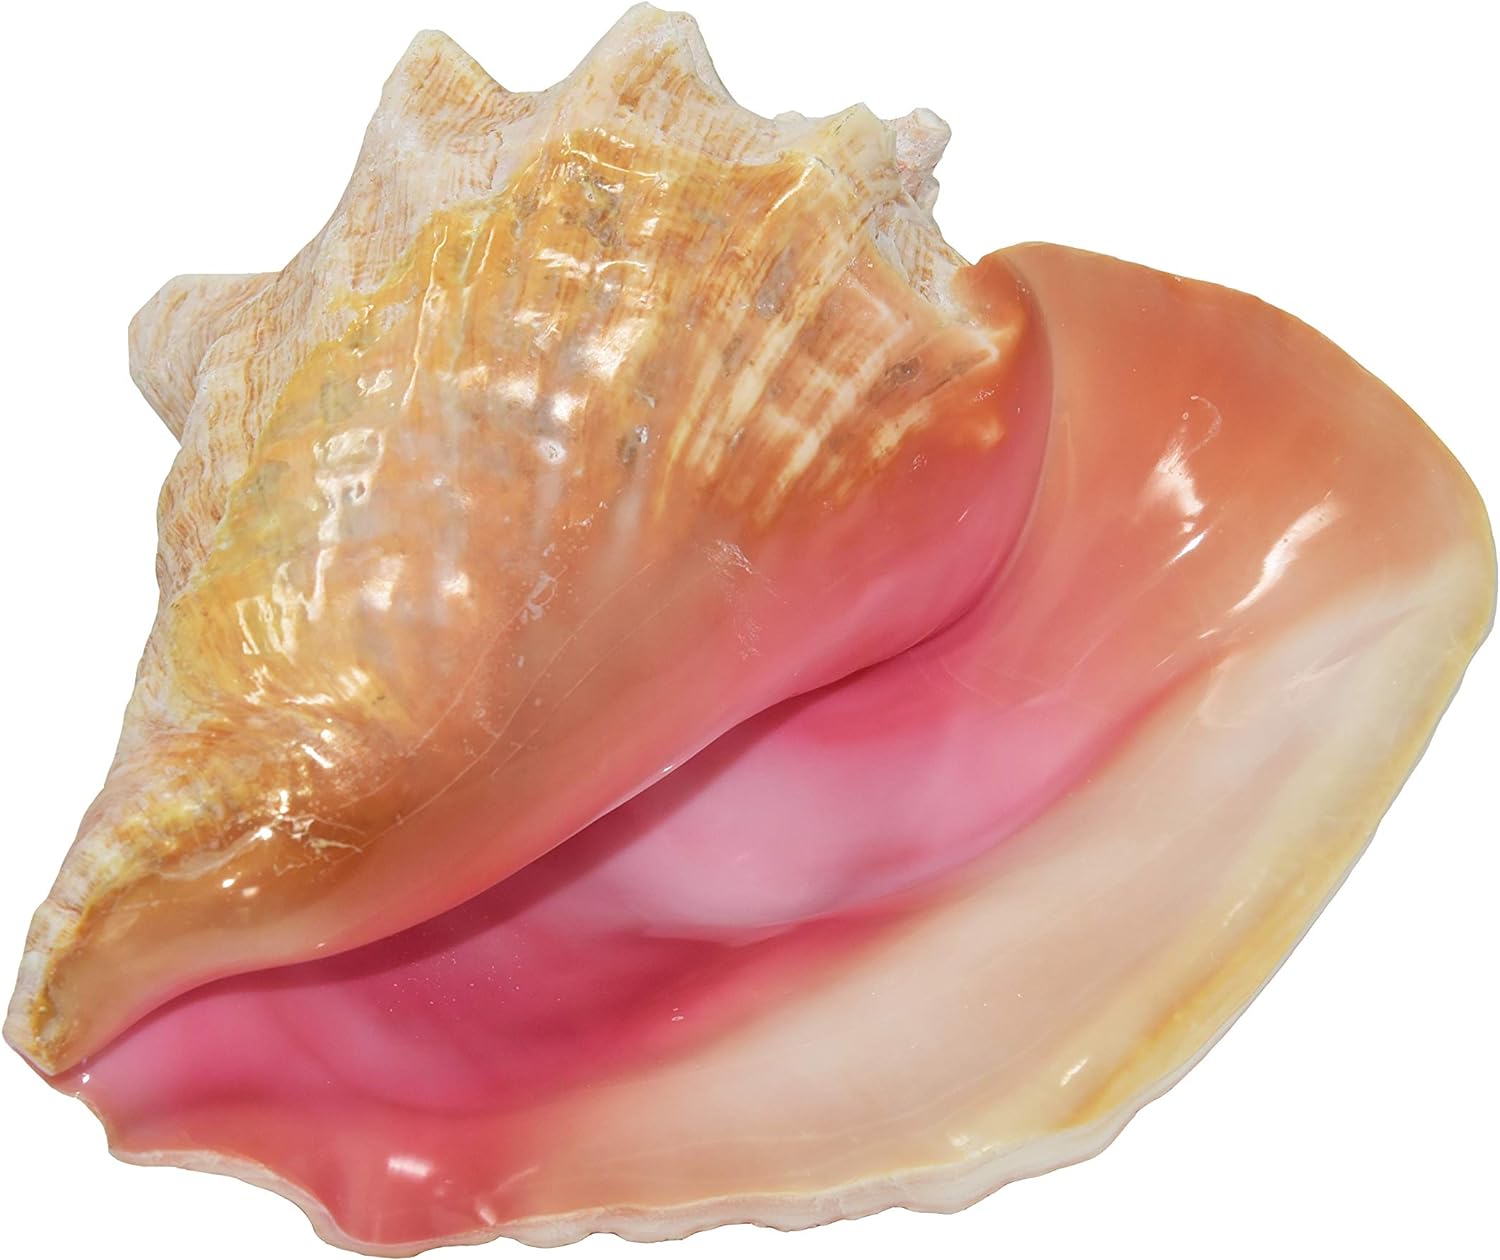 Jumbo HUGE Bahama Conch Seashell (Pink) - Bahamas Pink Conch Shell - 9-10 inch by Nautical Beach Decor